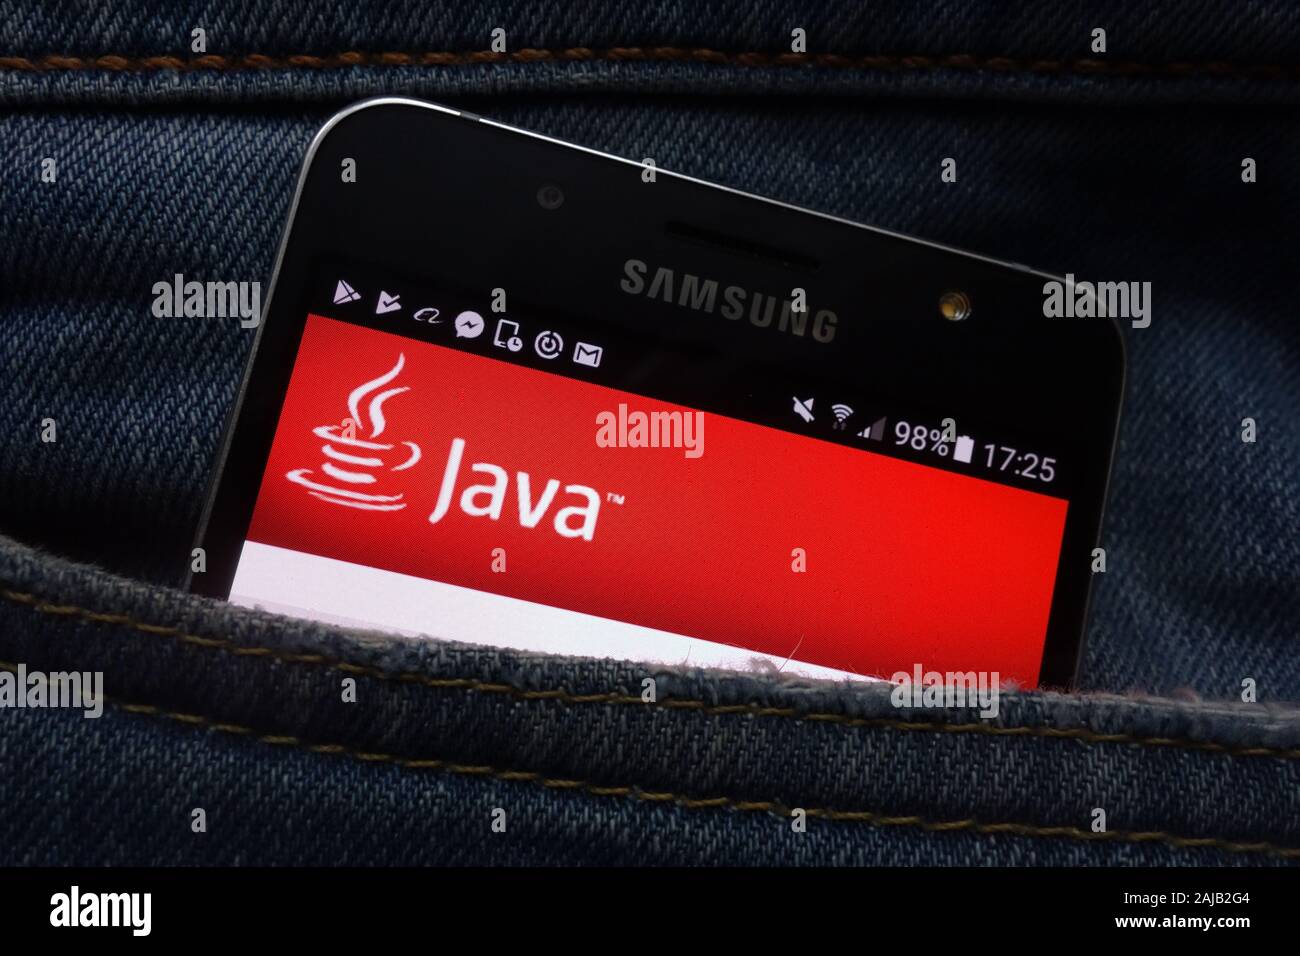 Java website displayed on Samsung smartphone hidden in jeans pocket Stock Photo